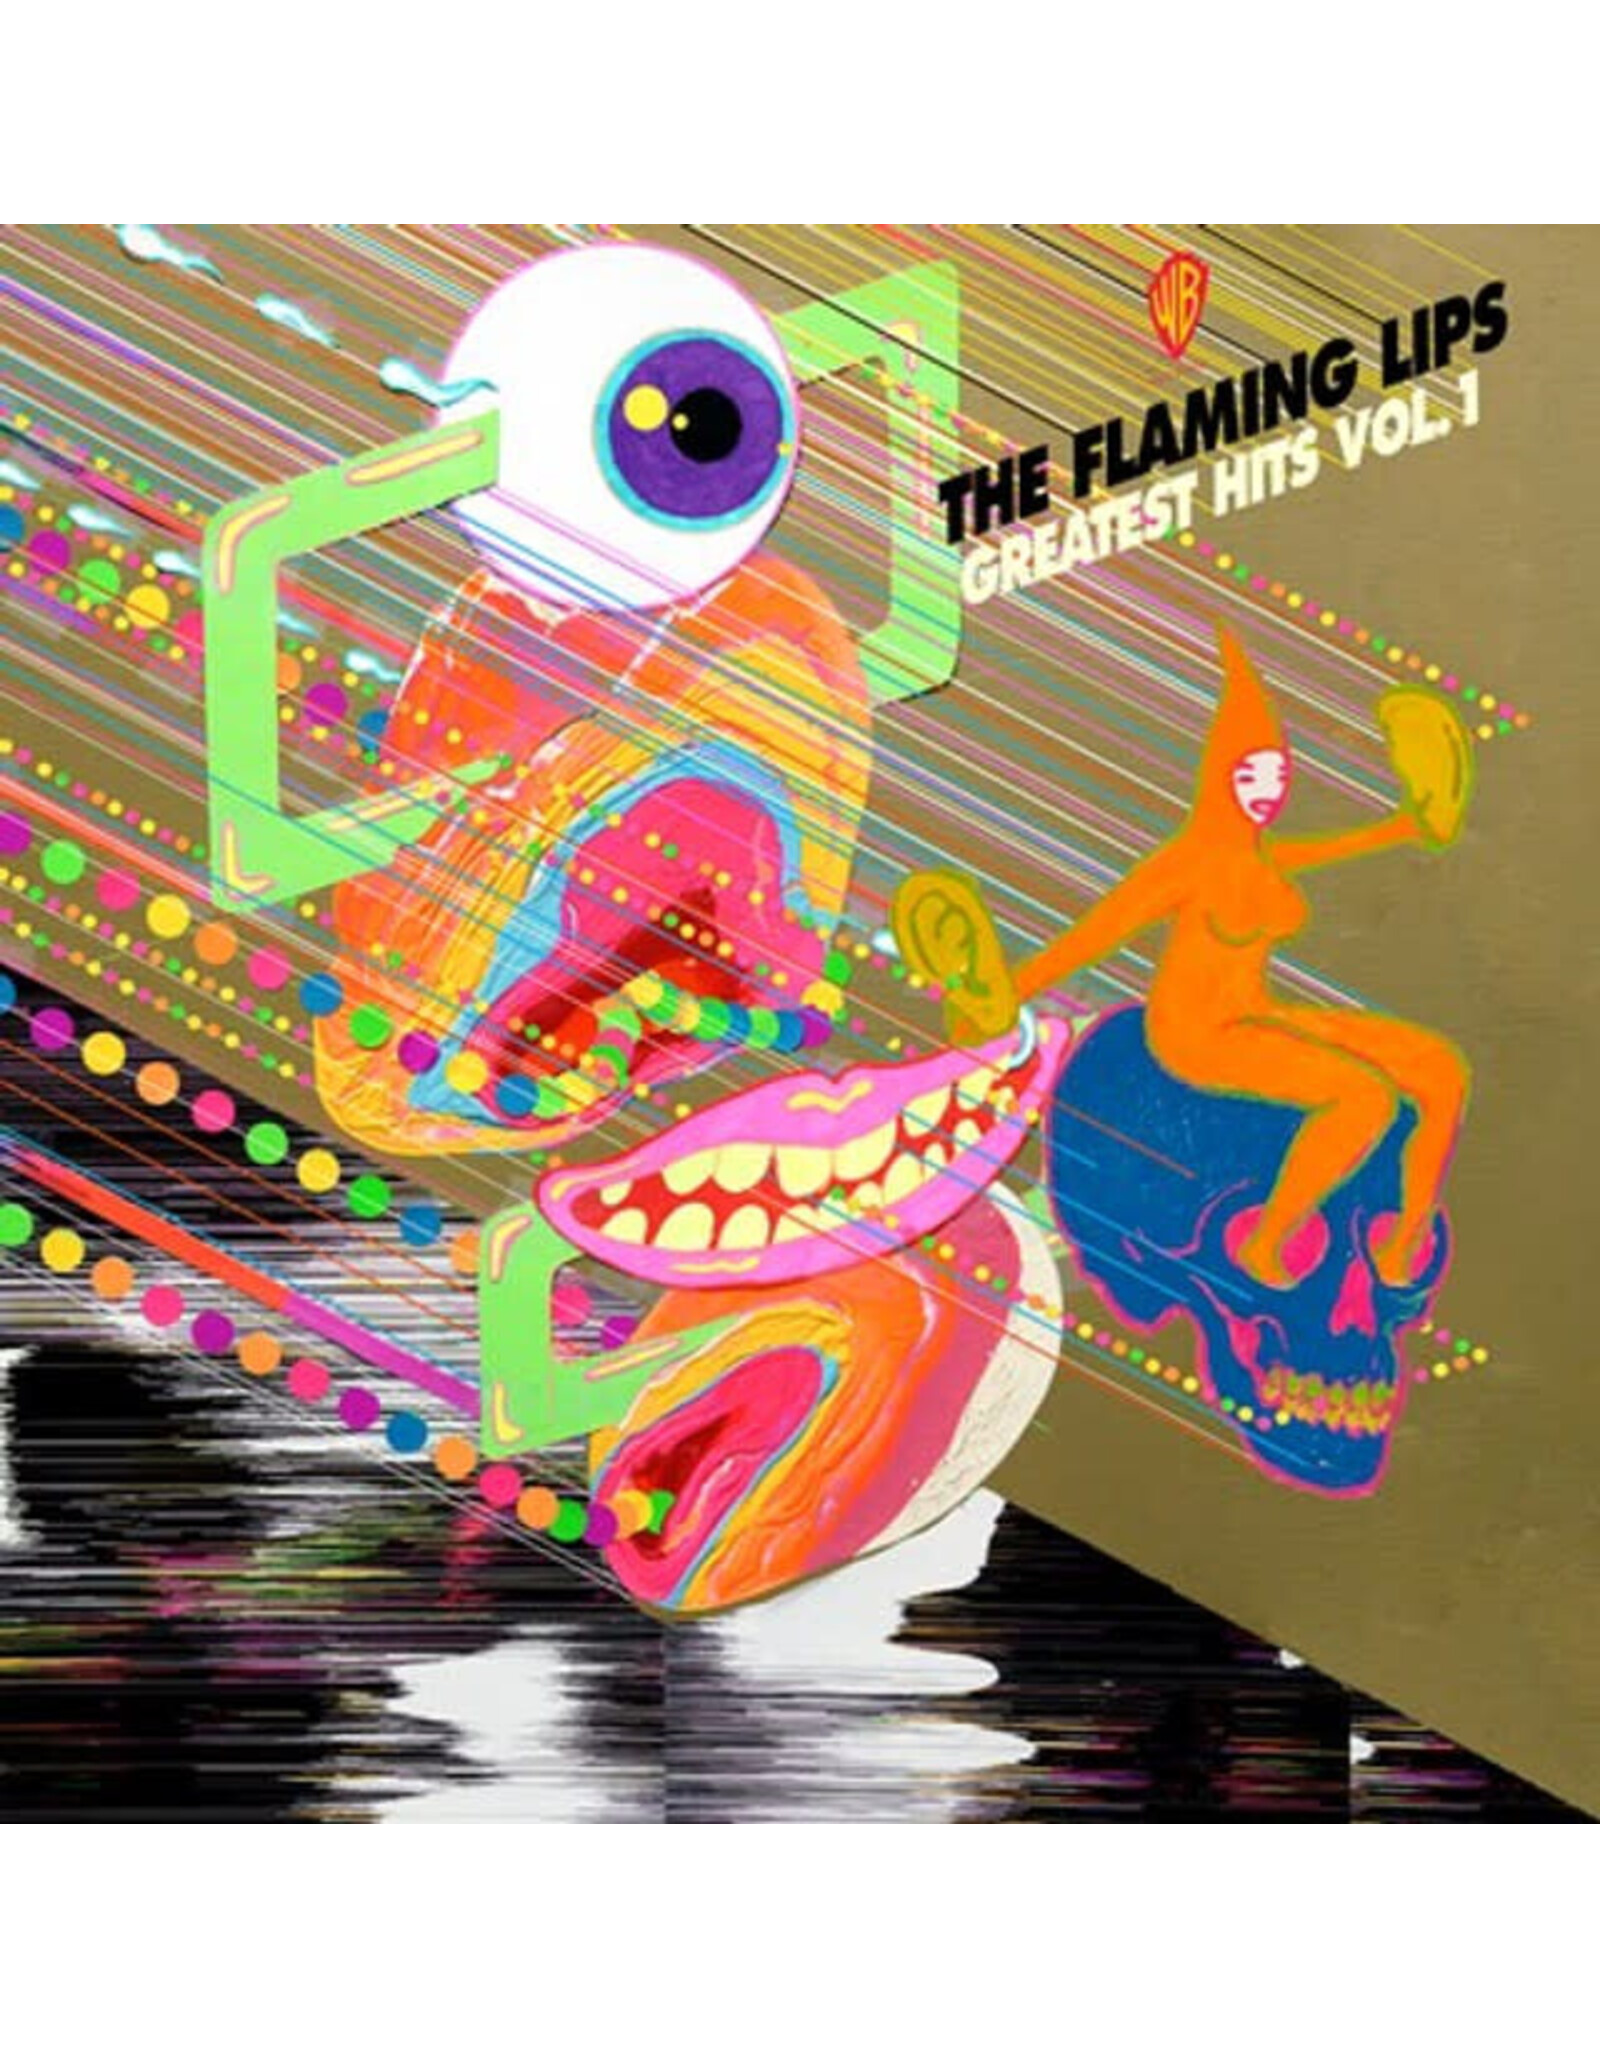 Warner Flaming Lips: Greatest Hits, Vol. 1 (Gold) LP